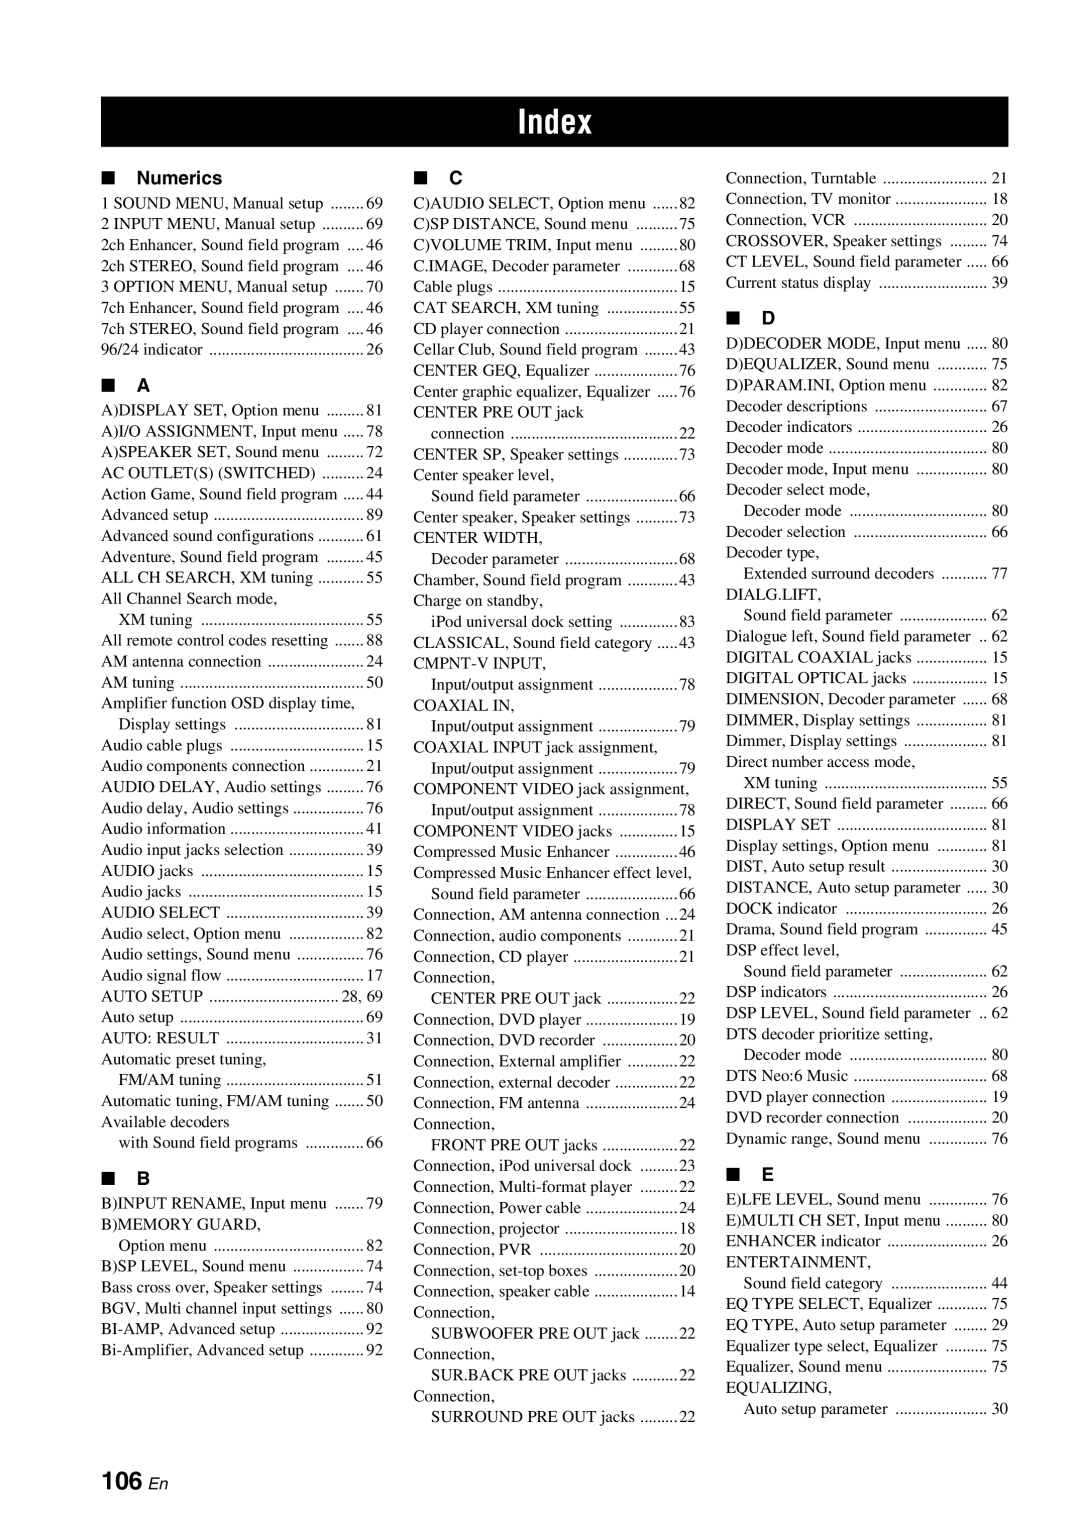 Yamaha HTR-6060 owner manual Index, 106 En, Numerics 